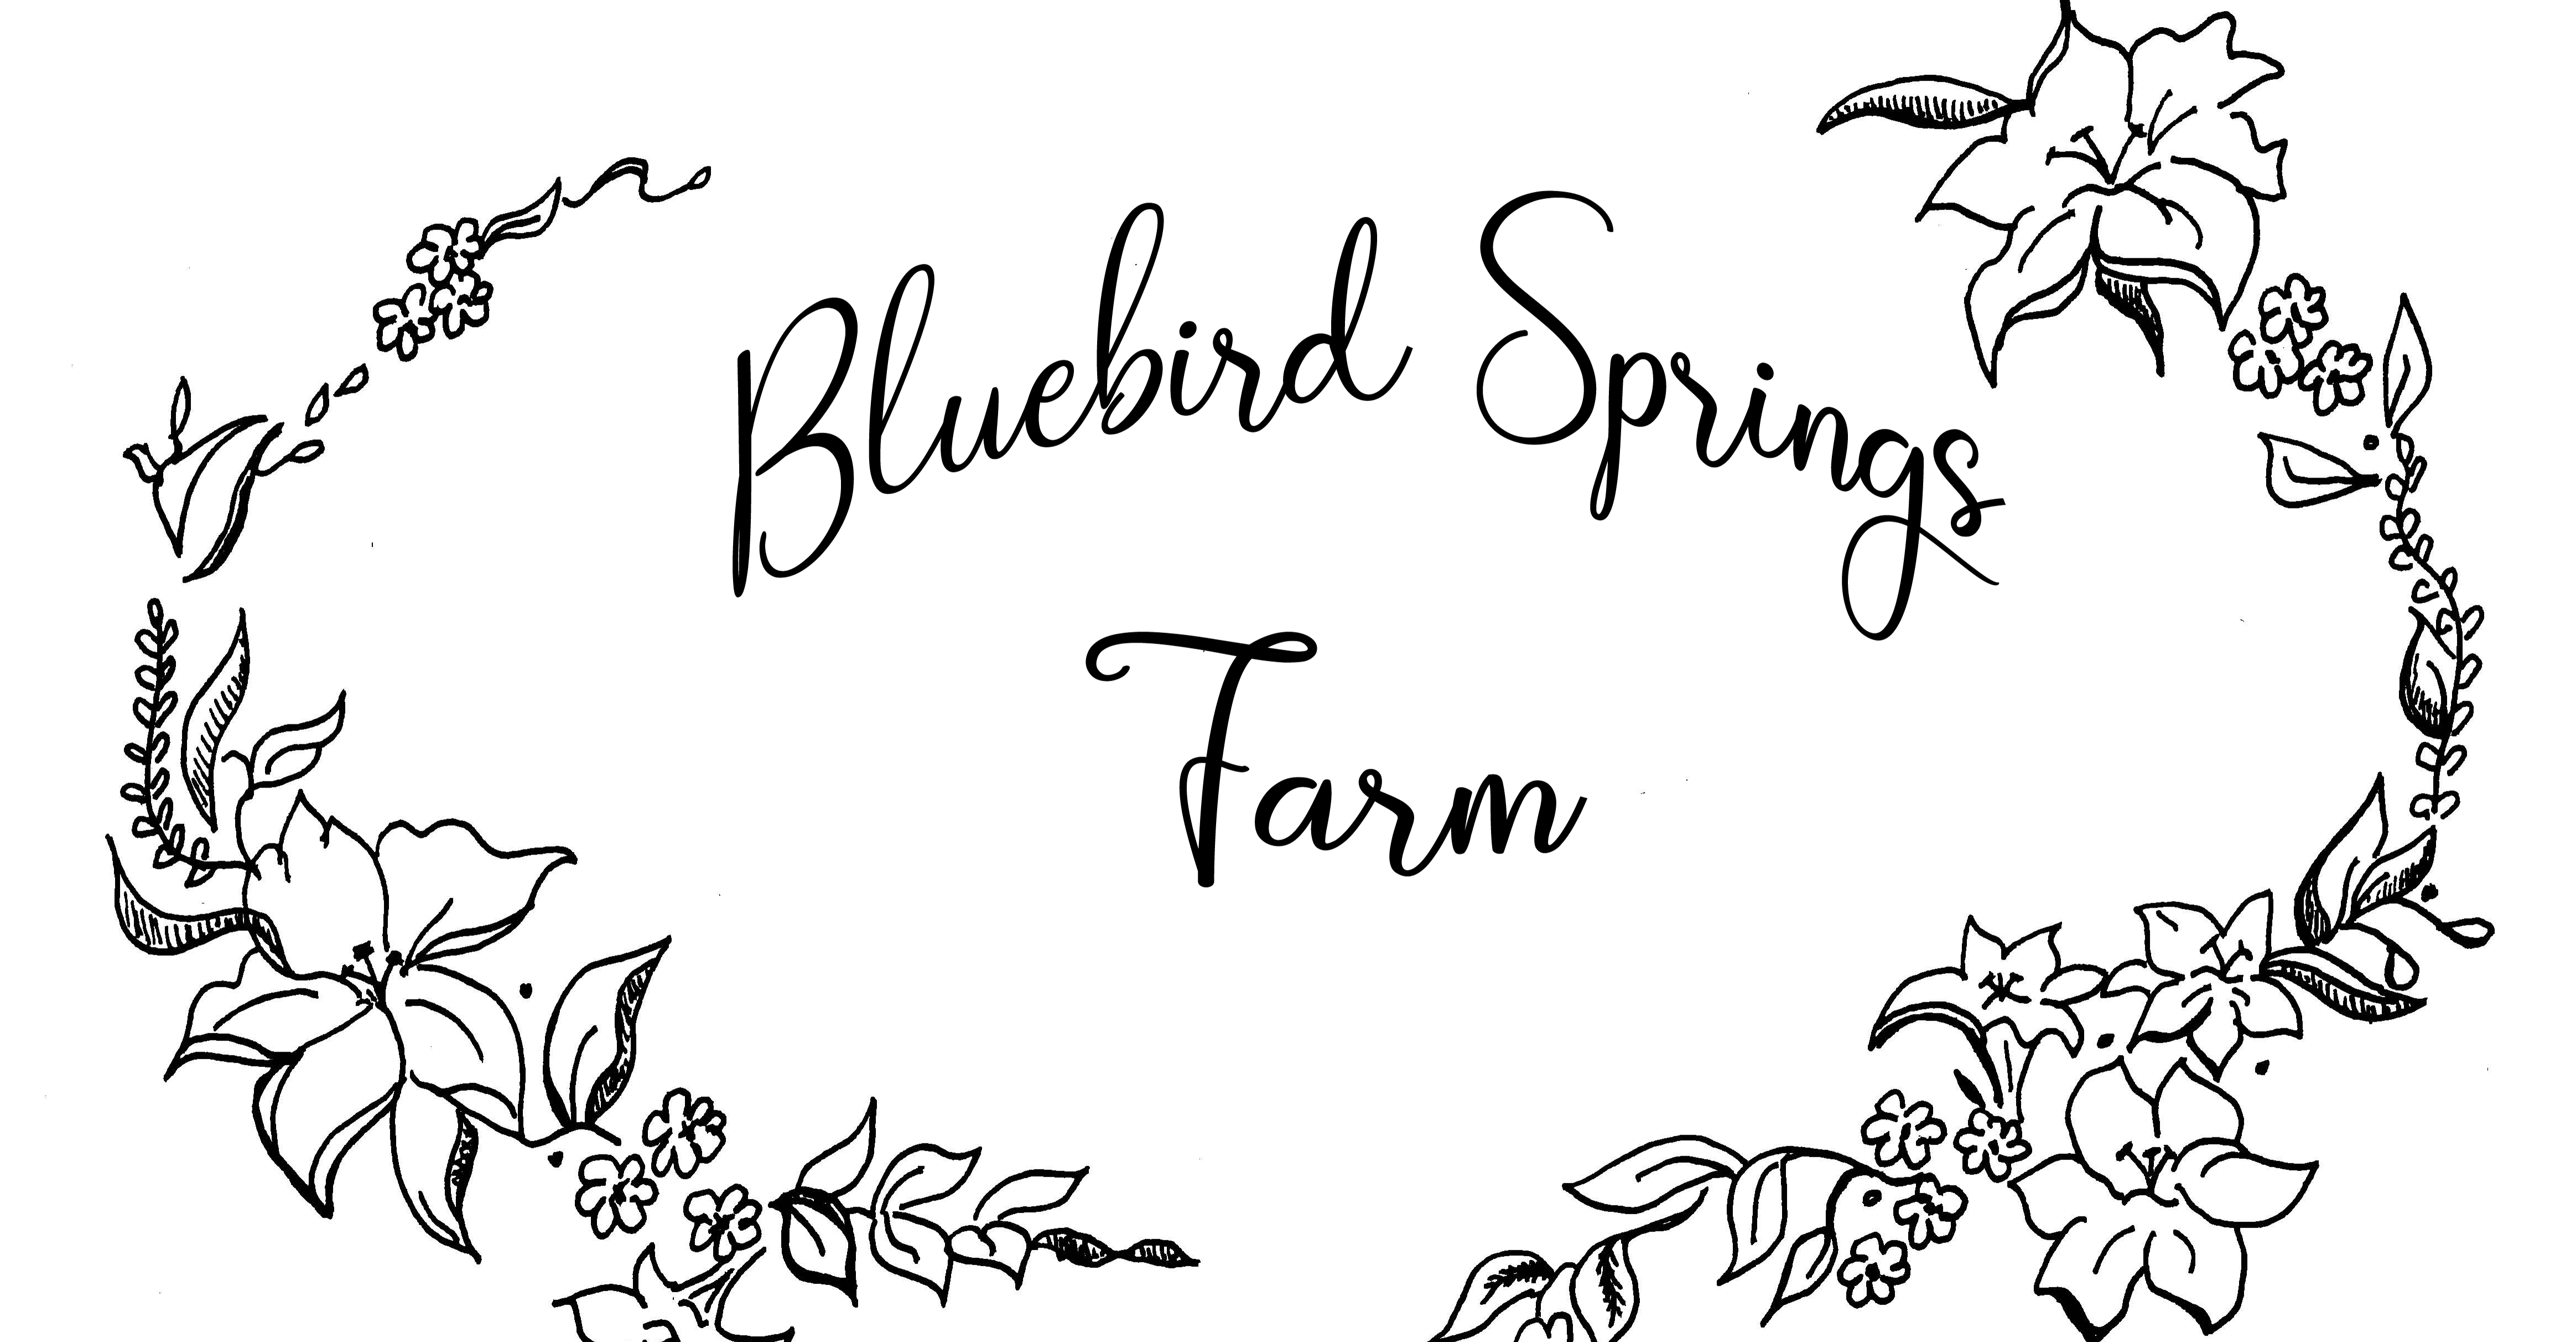 Bluebird Springs Farm